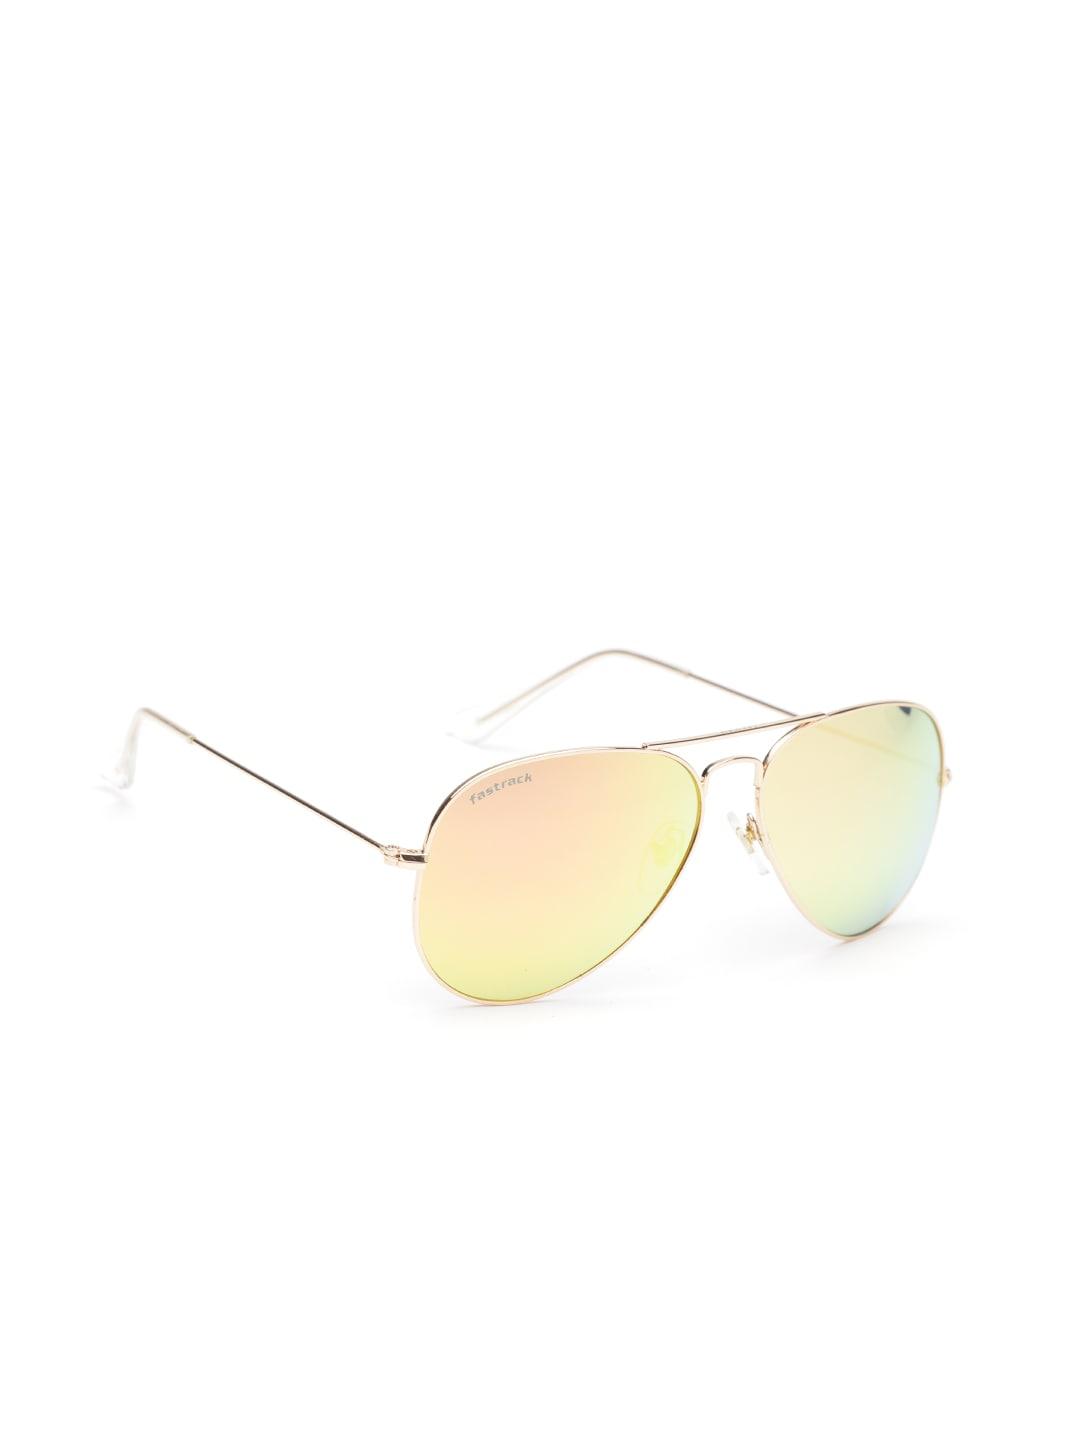 fastrack-men-mirrored-aviator-sunglasses-nbm165br13